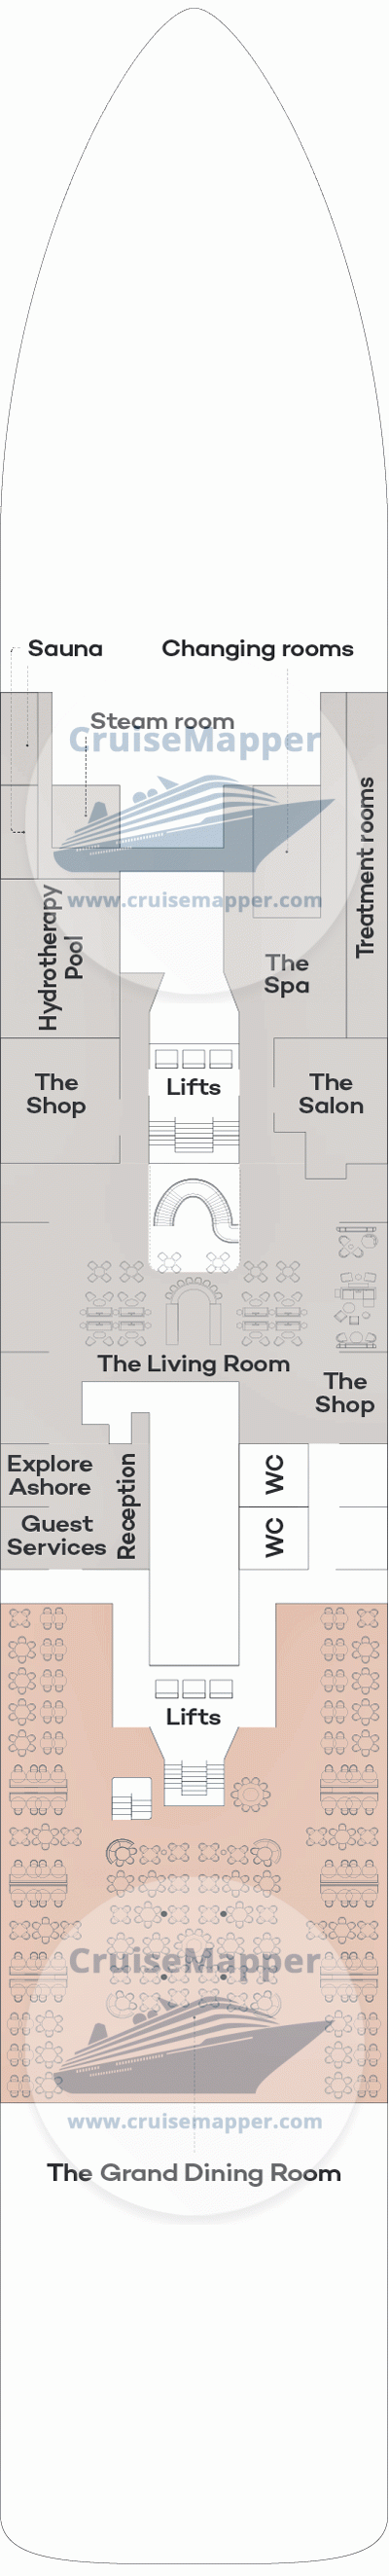 Spirit of Adventure Deck 05 - Main-Dining-Lobby-Shops-Spa